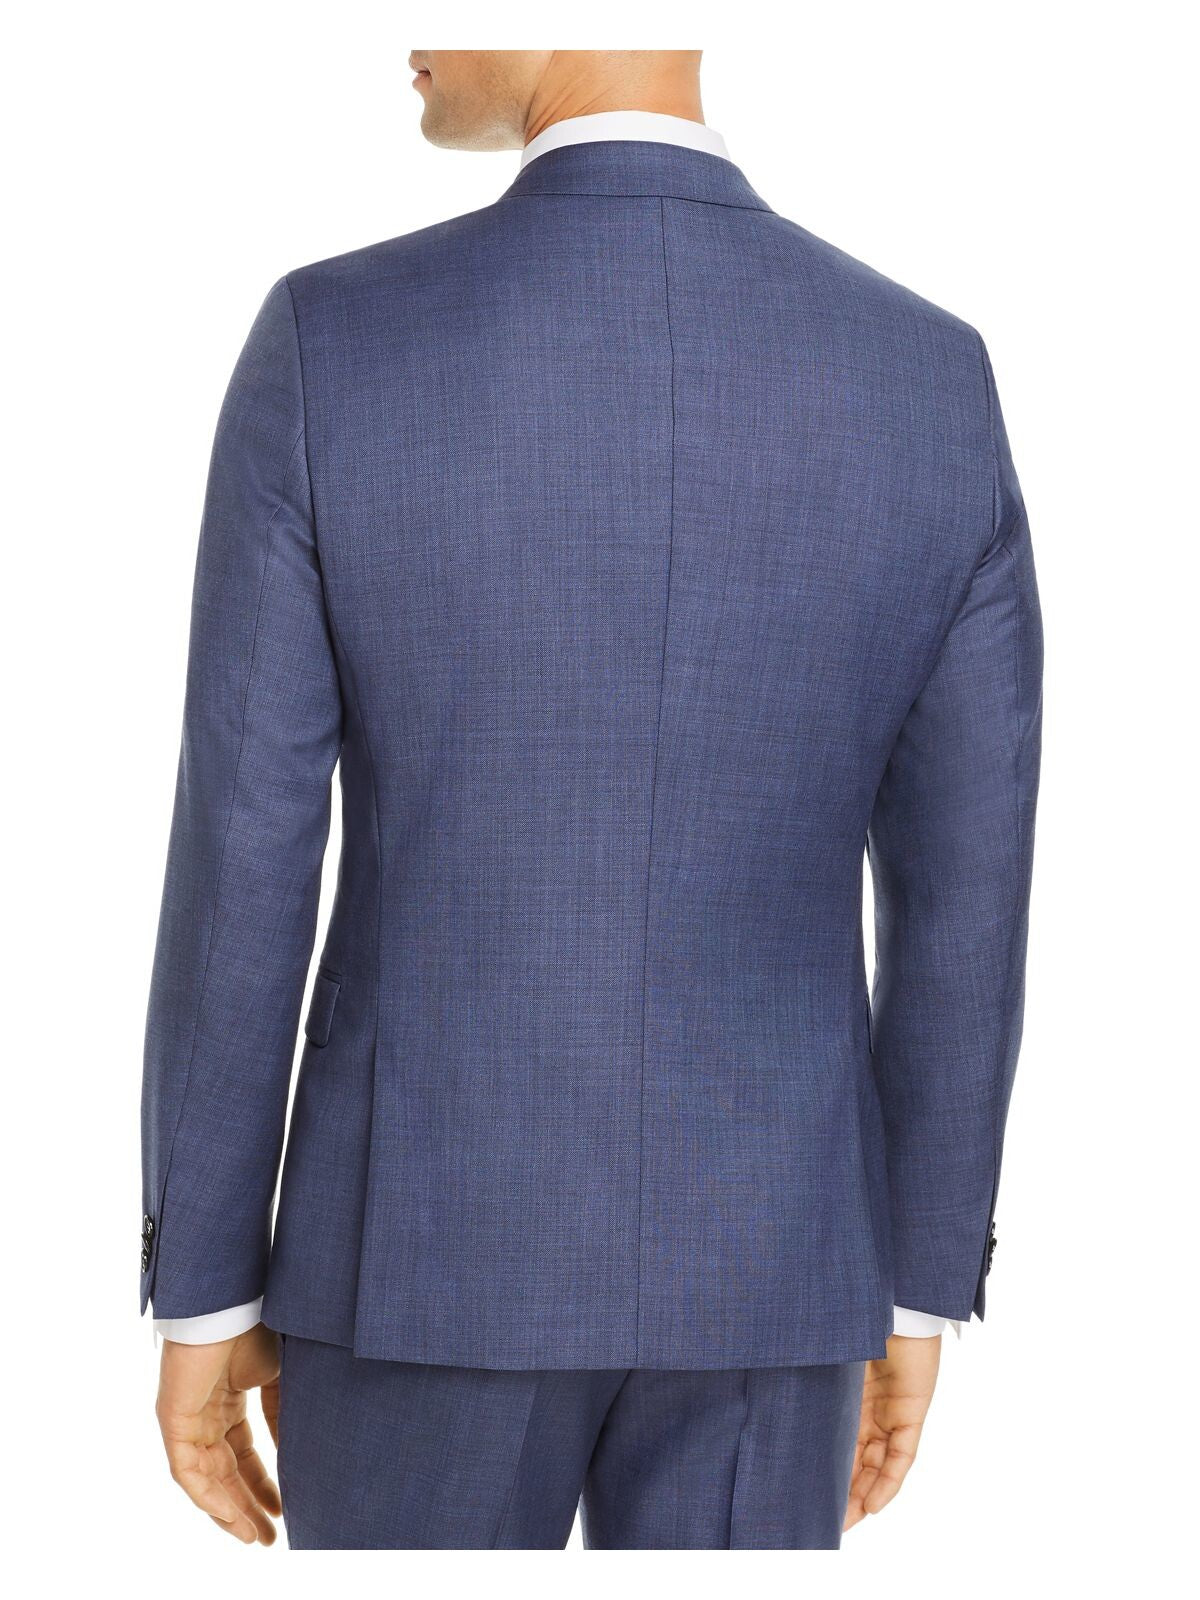 HUGO BOSS Mens Sharkskin Blue Single Breasted, Patterned Extra Slim Fit Wool Blend Blazer 46R